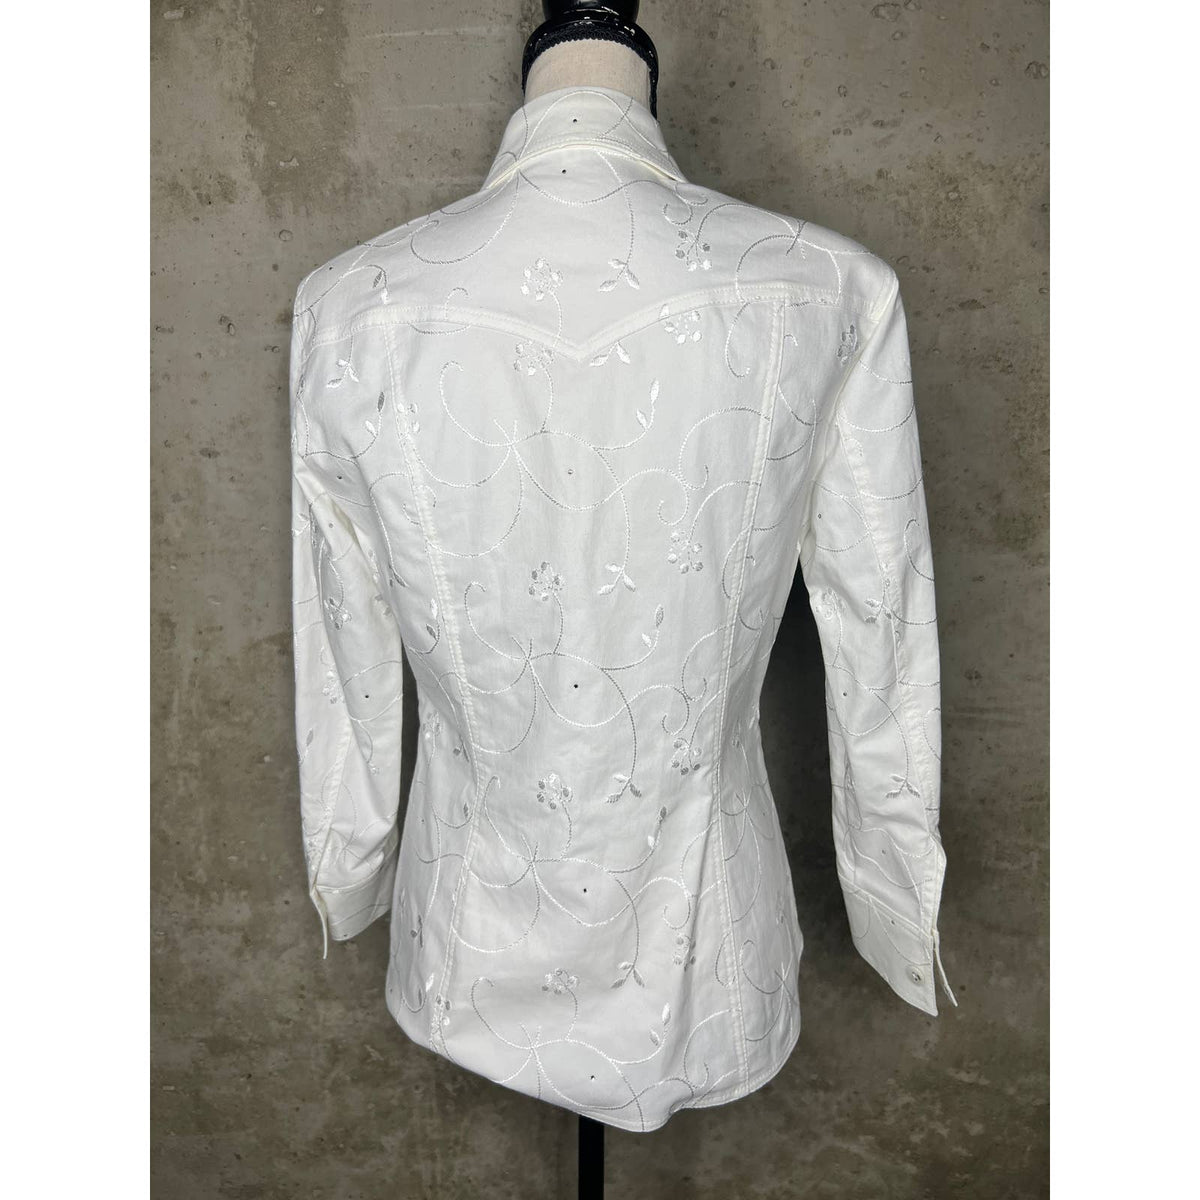 Escada White Embroidered Button-Up Blouse Sz.2(34)